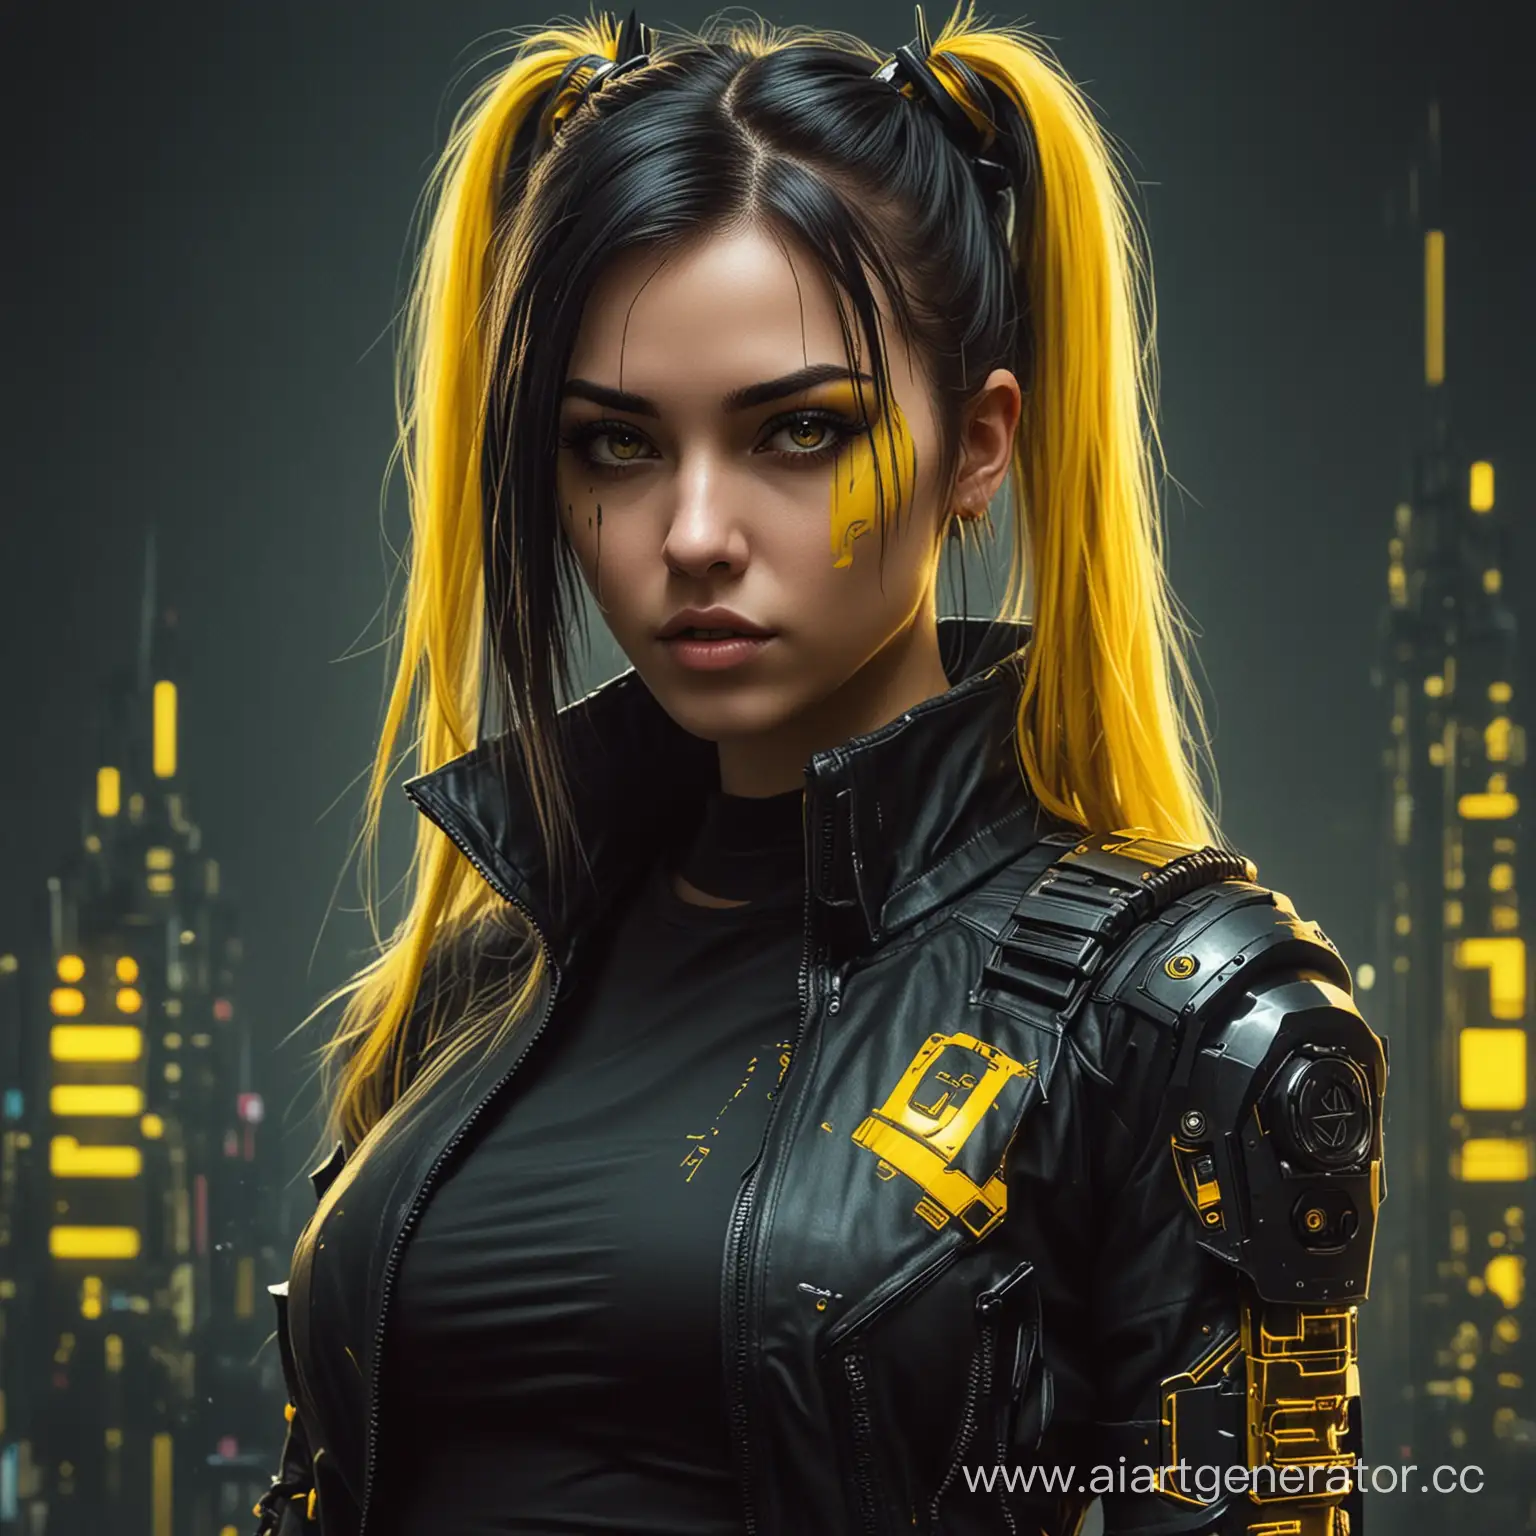 Cyberpunk-Girl-in-Black-and-Yellow-Futuristic-Urban-Portrait